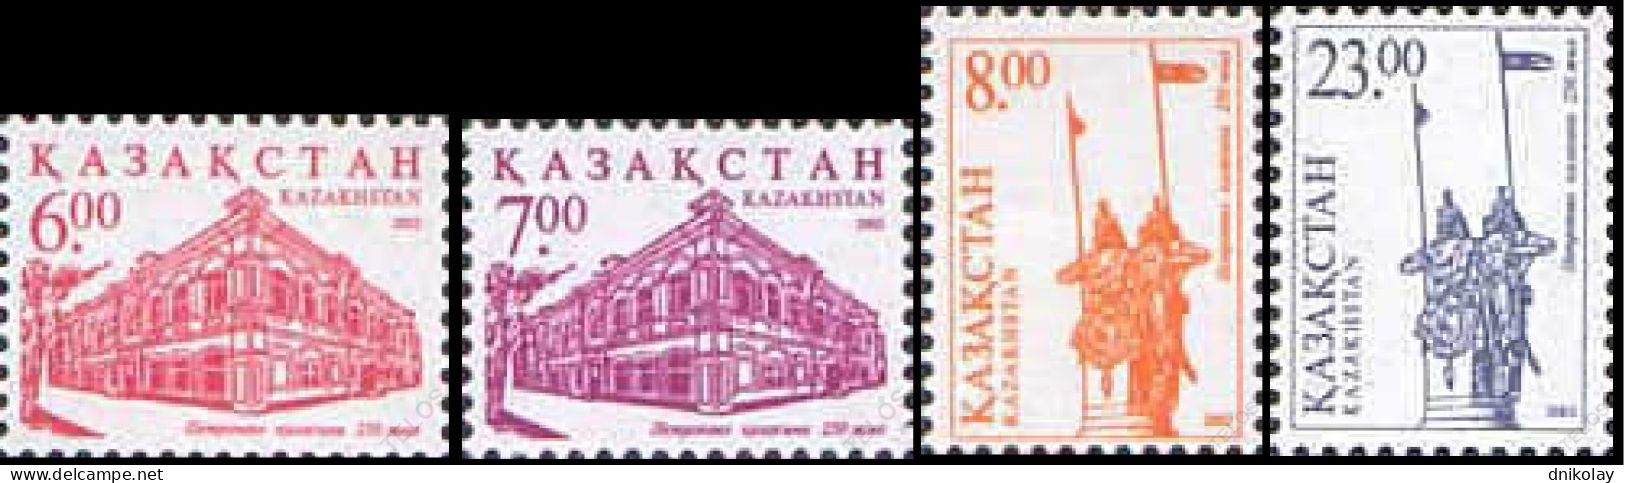 2002 389 Kazakhstan The 250th Anniversary Of Petropavlovsk MNH - Kazakistan